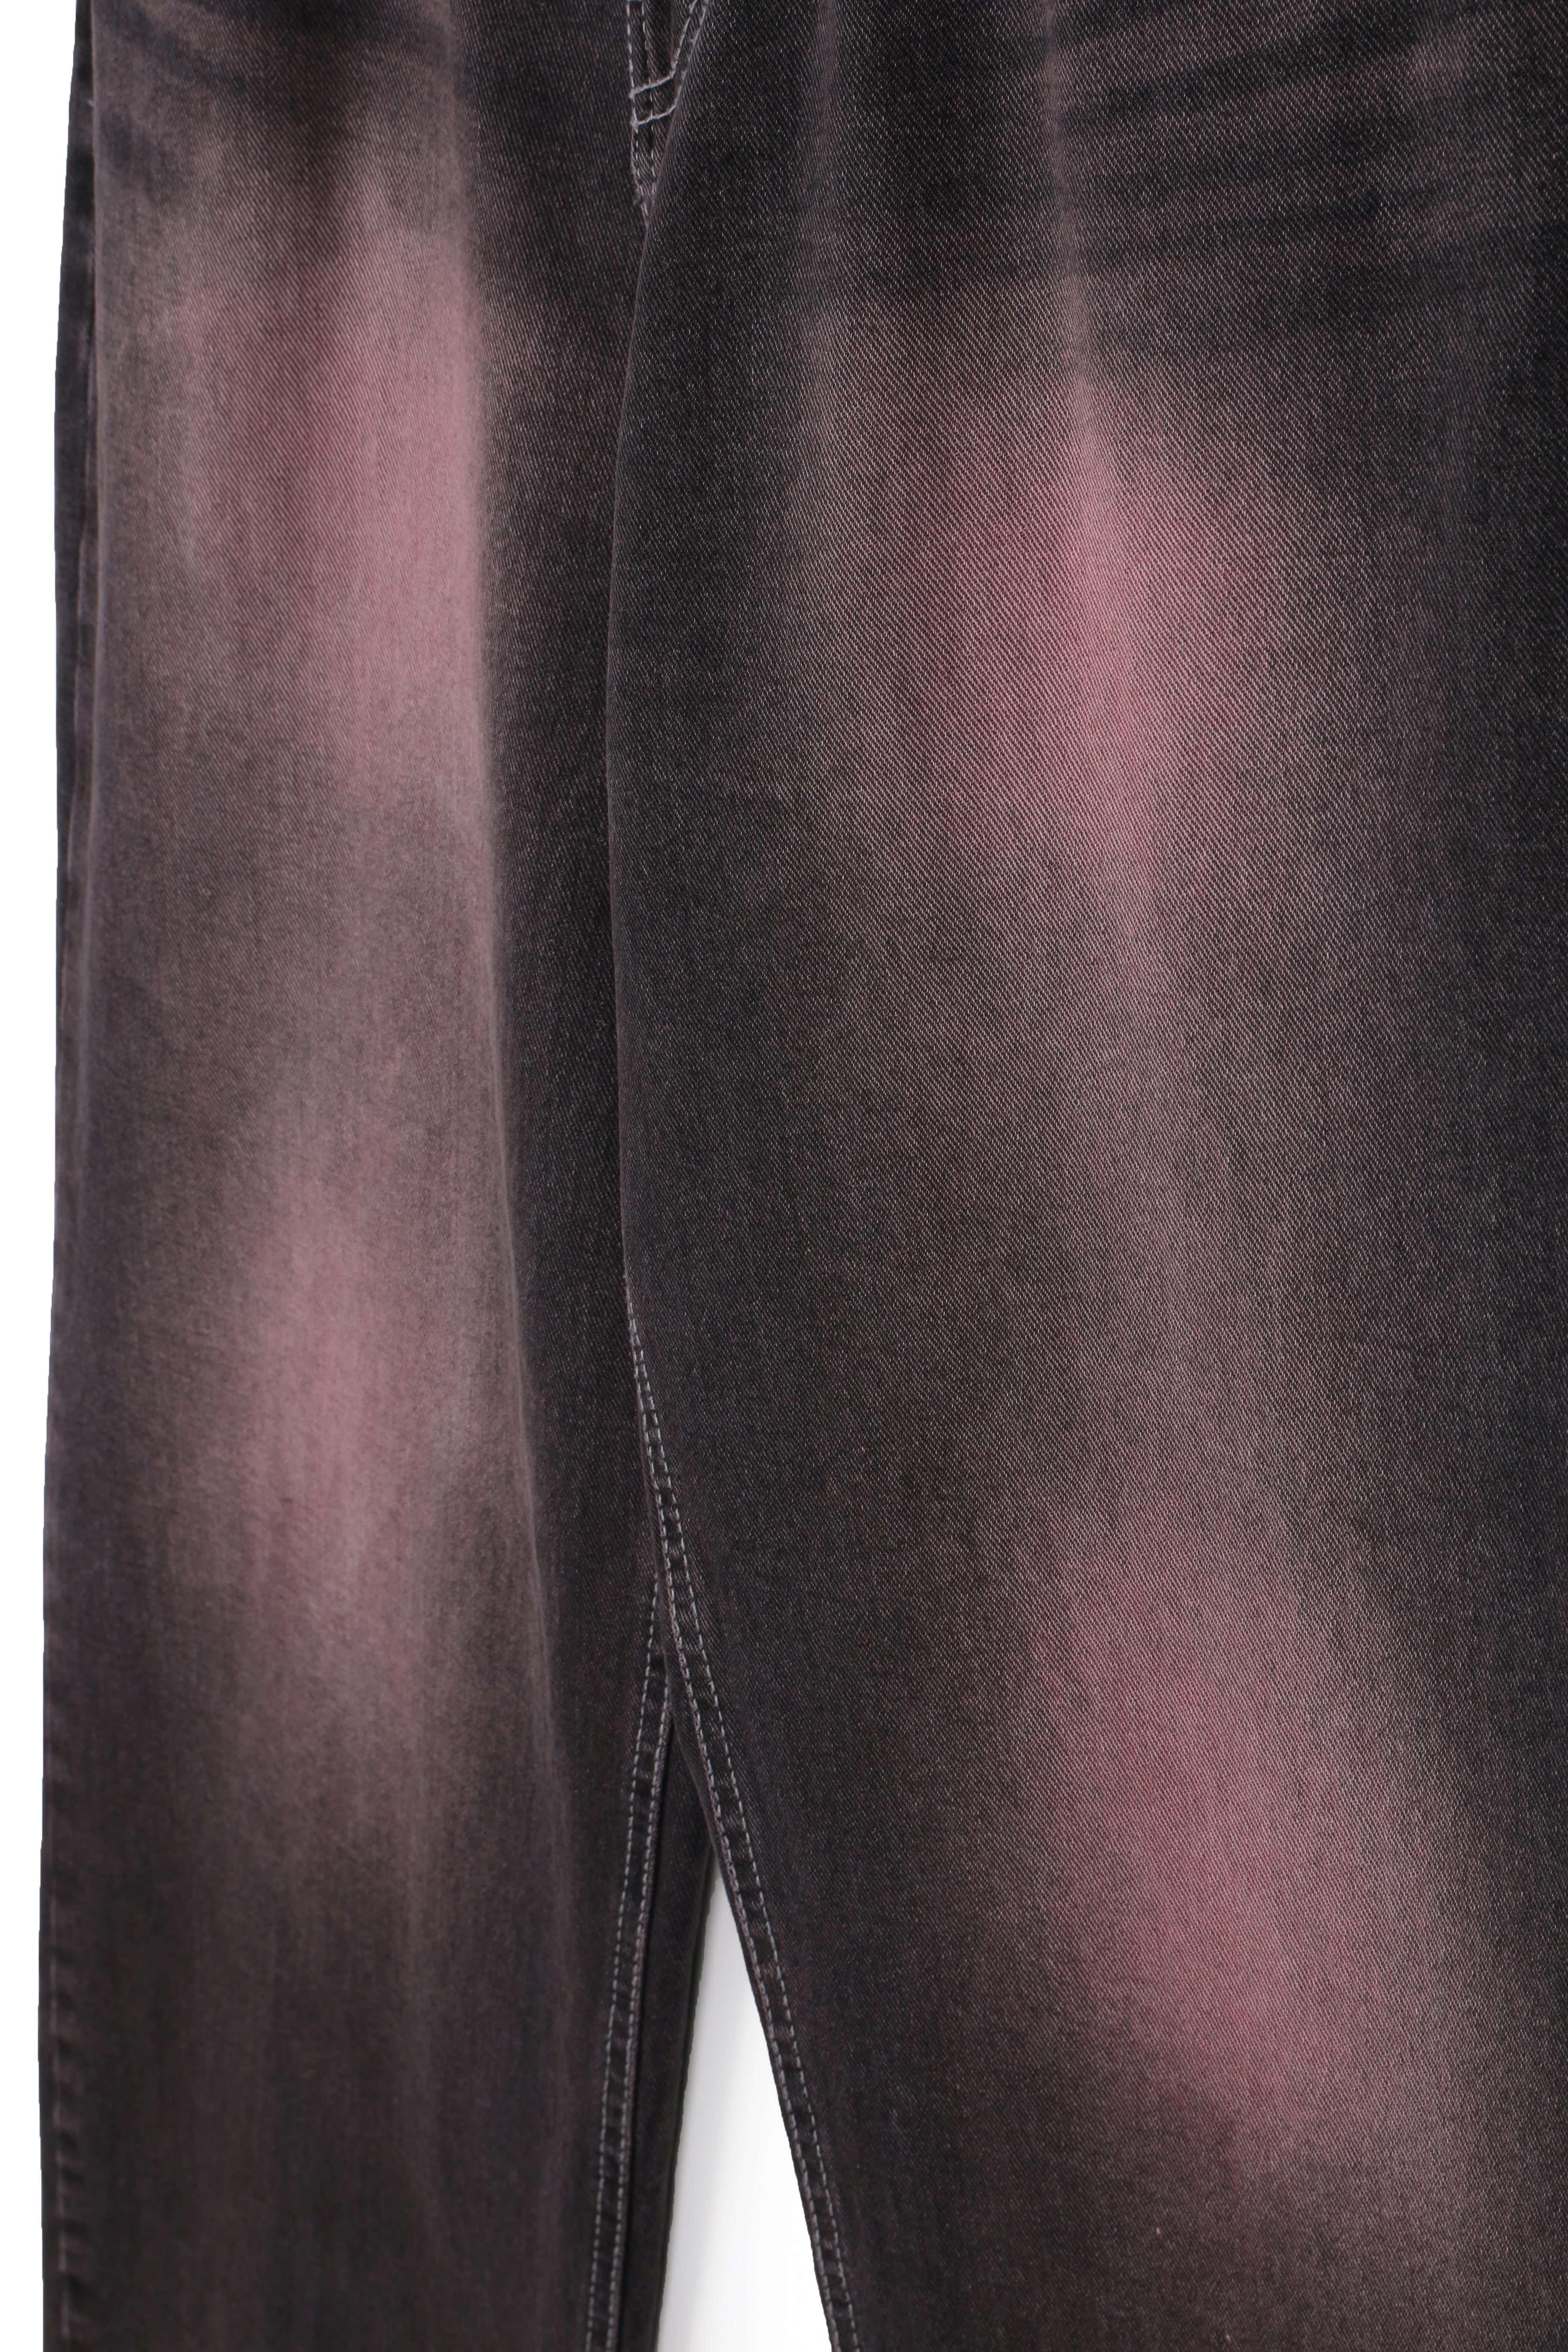 W.Pink Tin Black Denim Pants [1color]